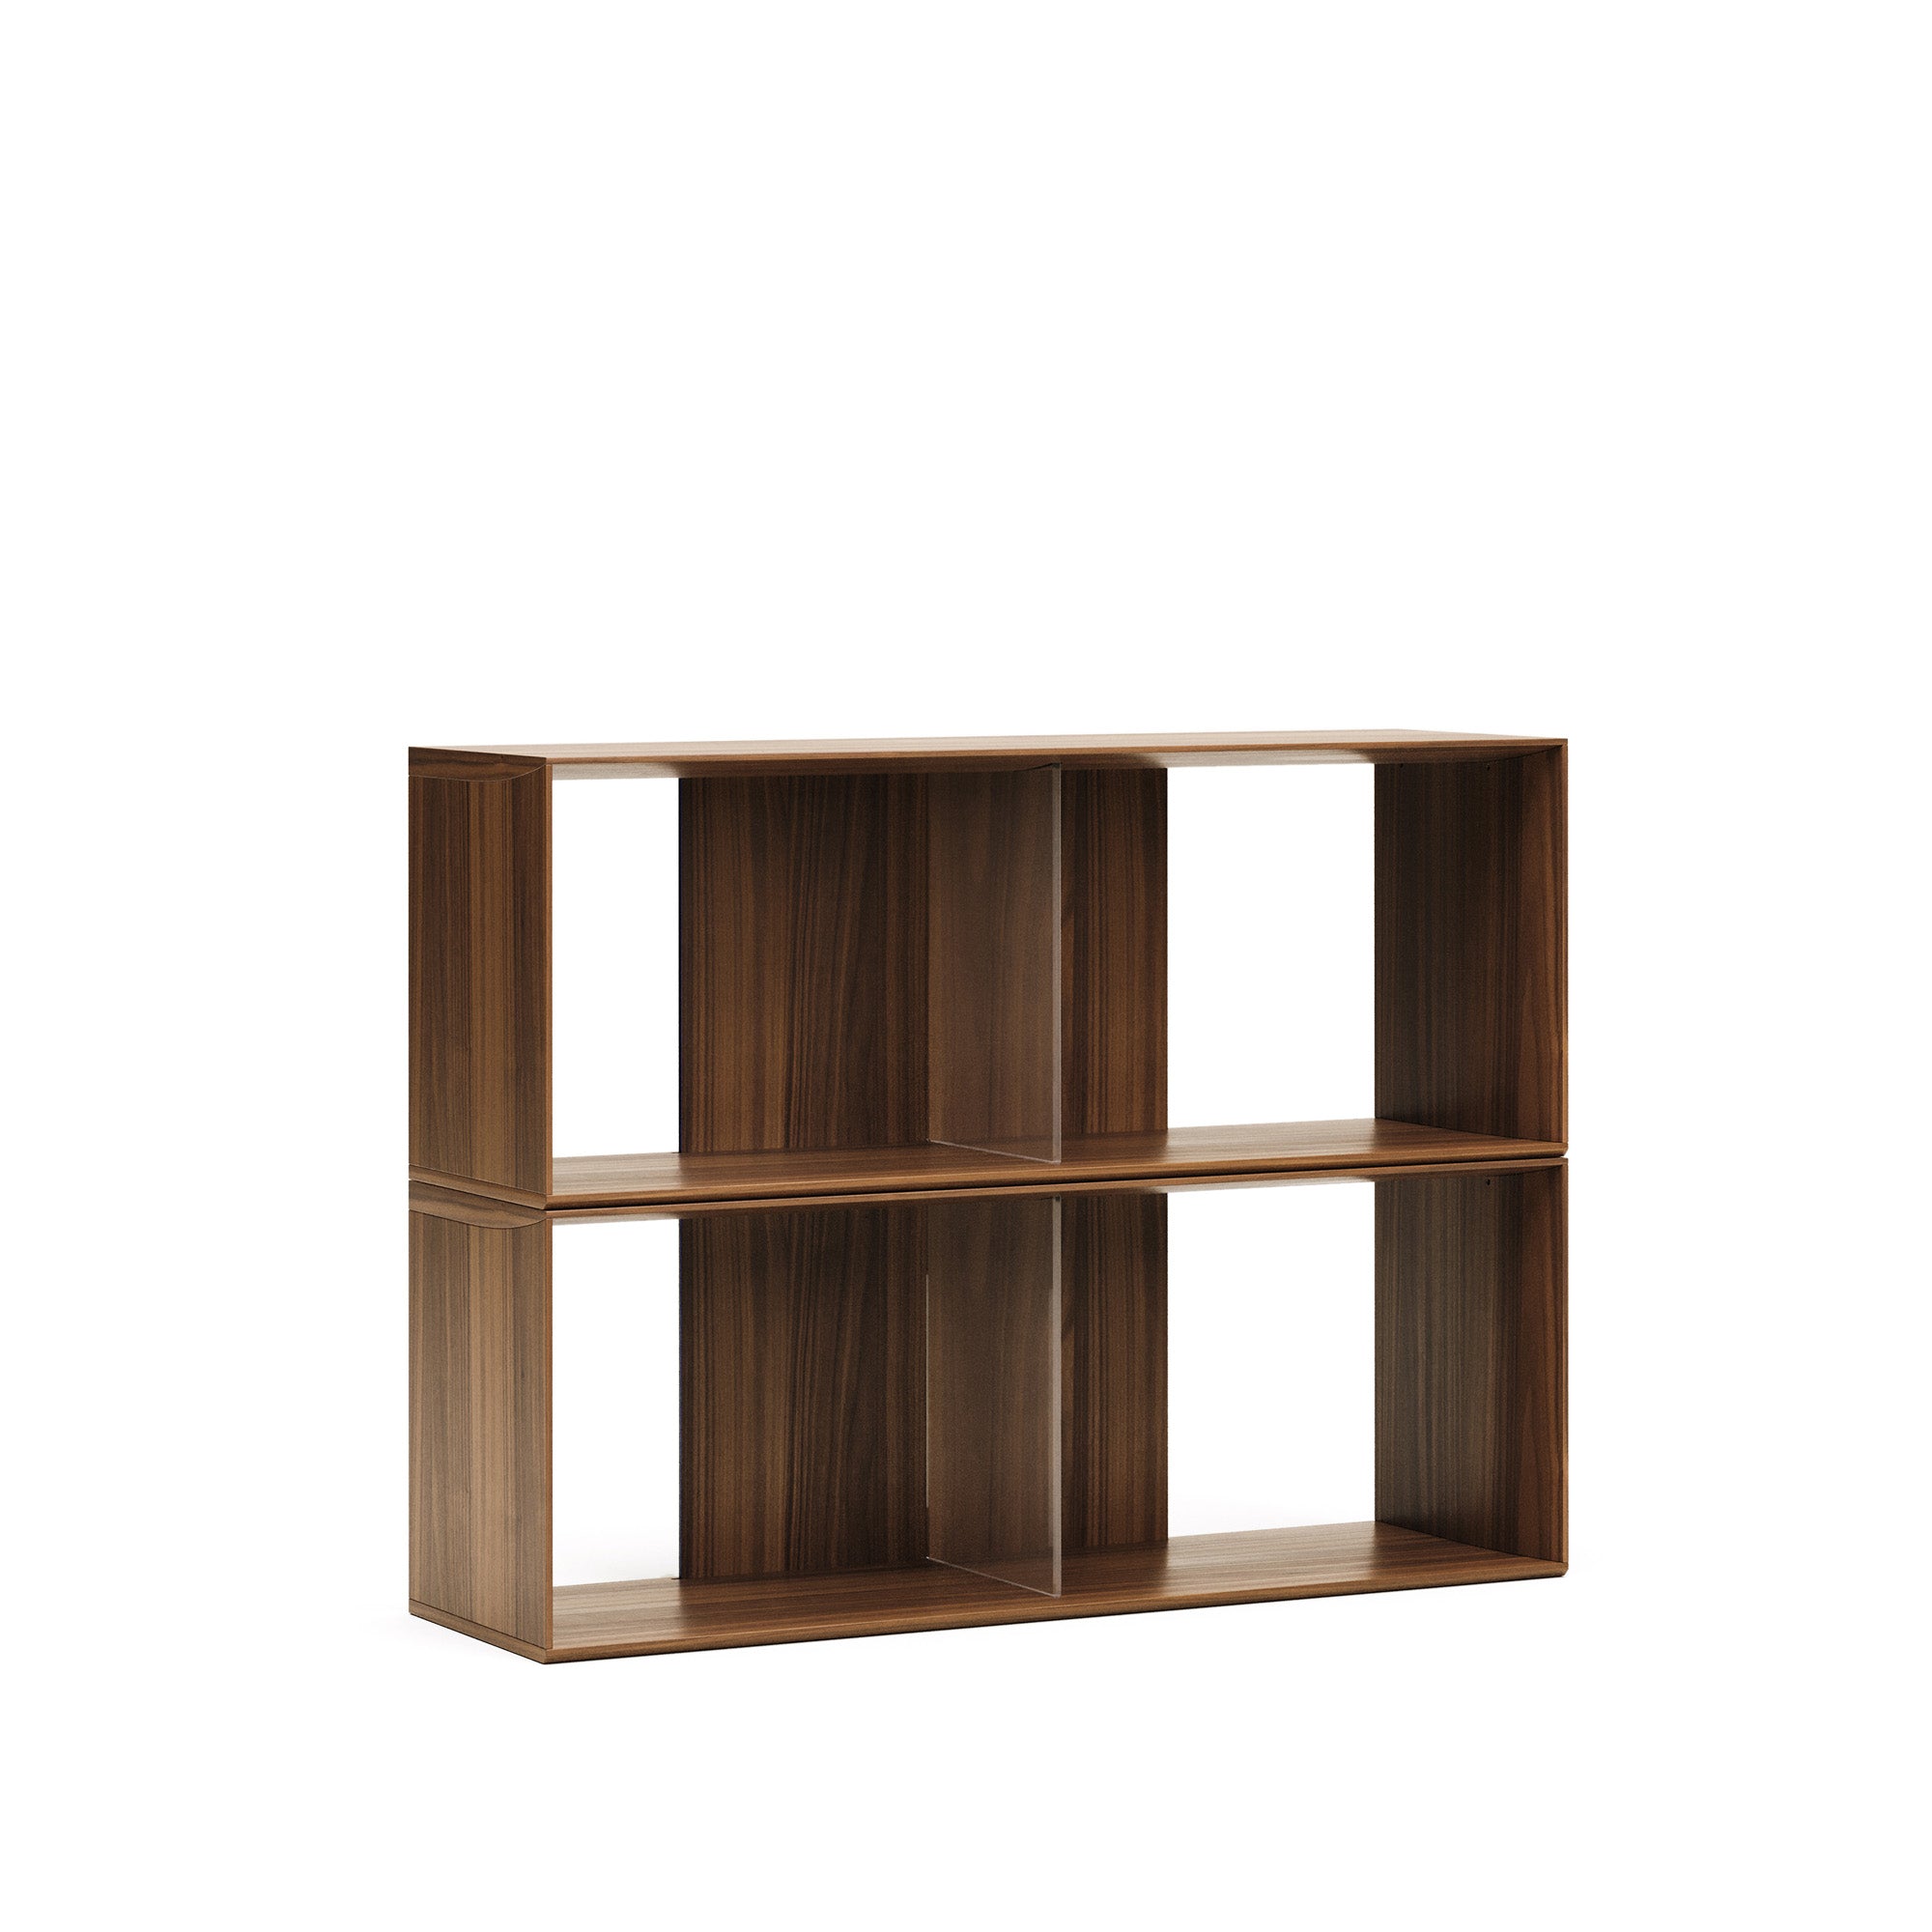 Litto set of 2 modular shelving units in walnut wood veneer, 101 x 76 cm